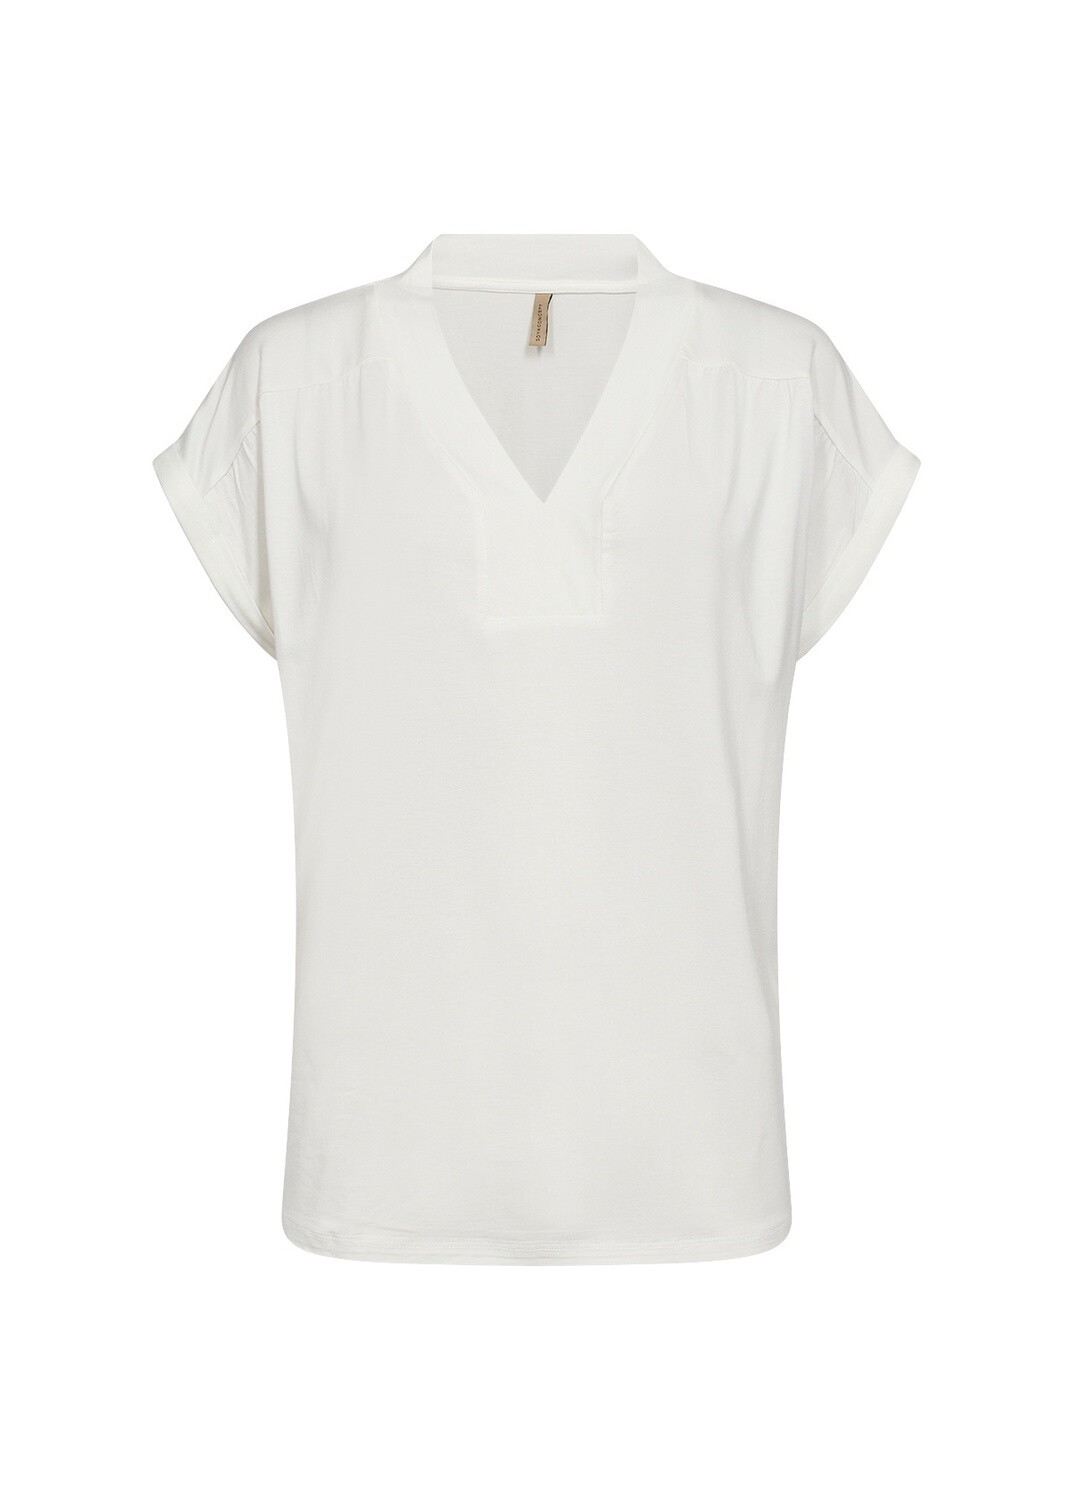 SOYA CONCEPT T-Shirt SC-MARICA 26433, Colour: Off-White, Size: XS